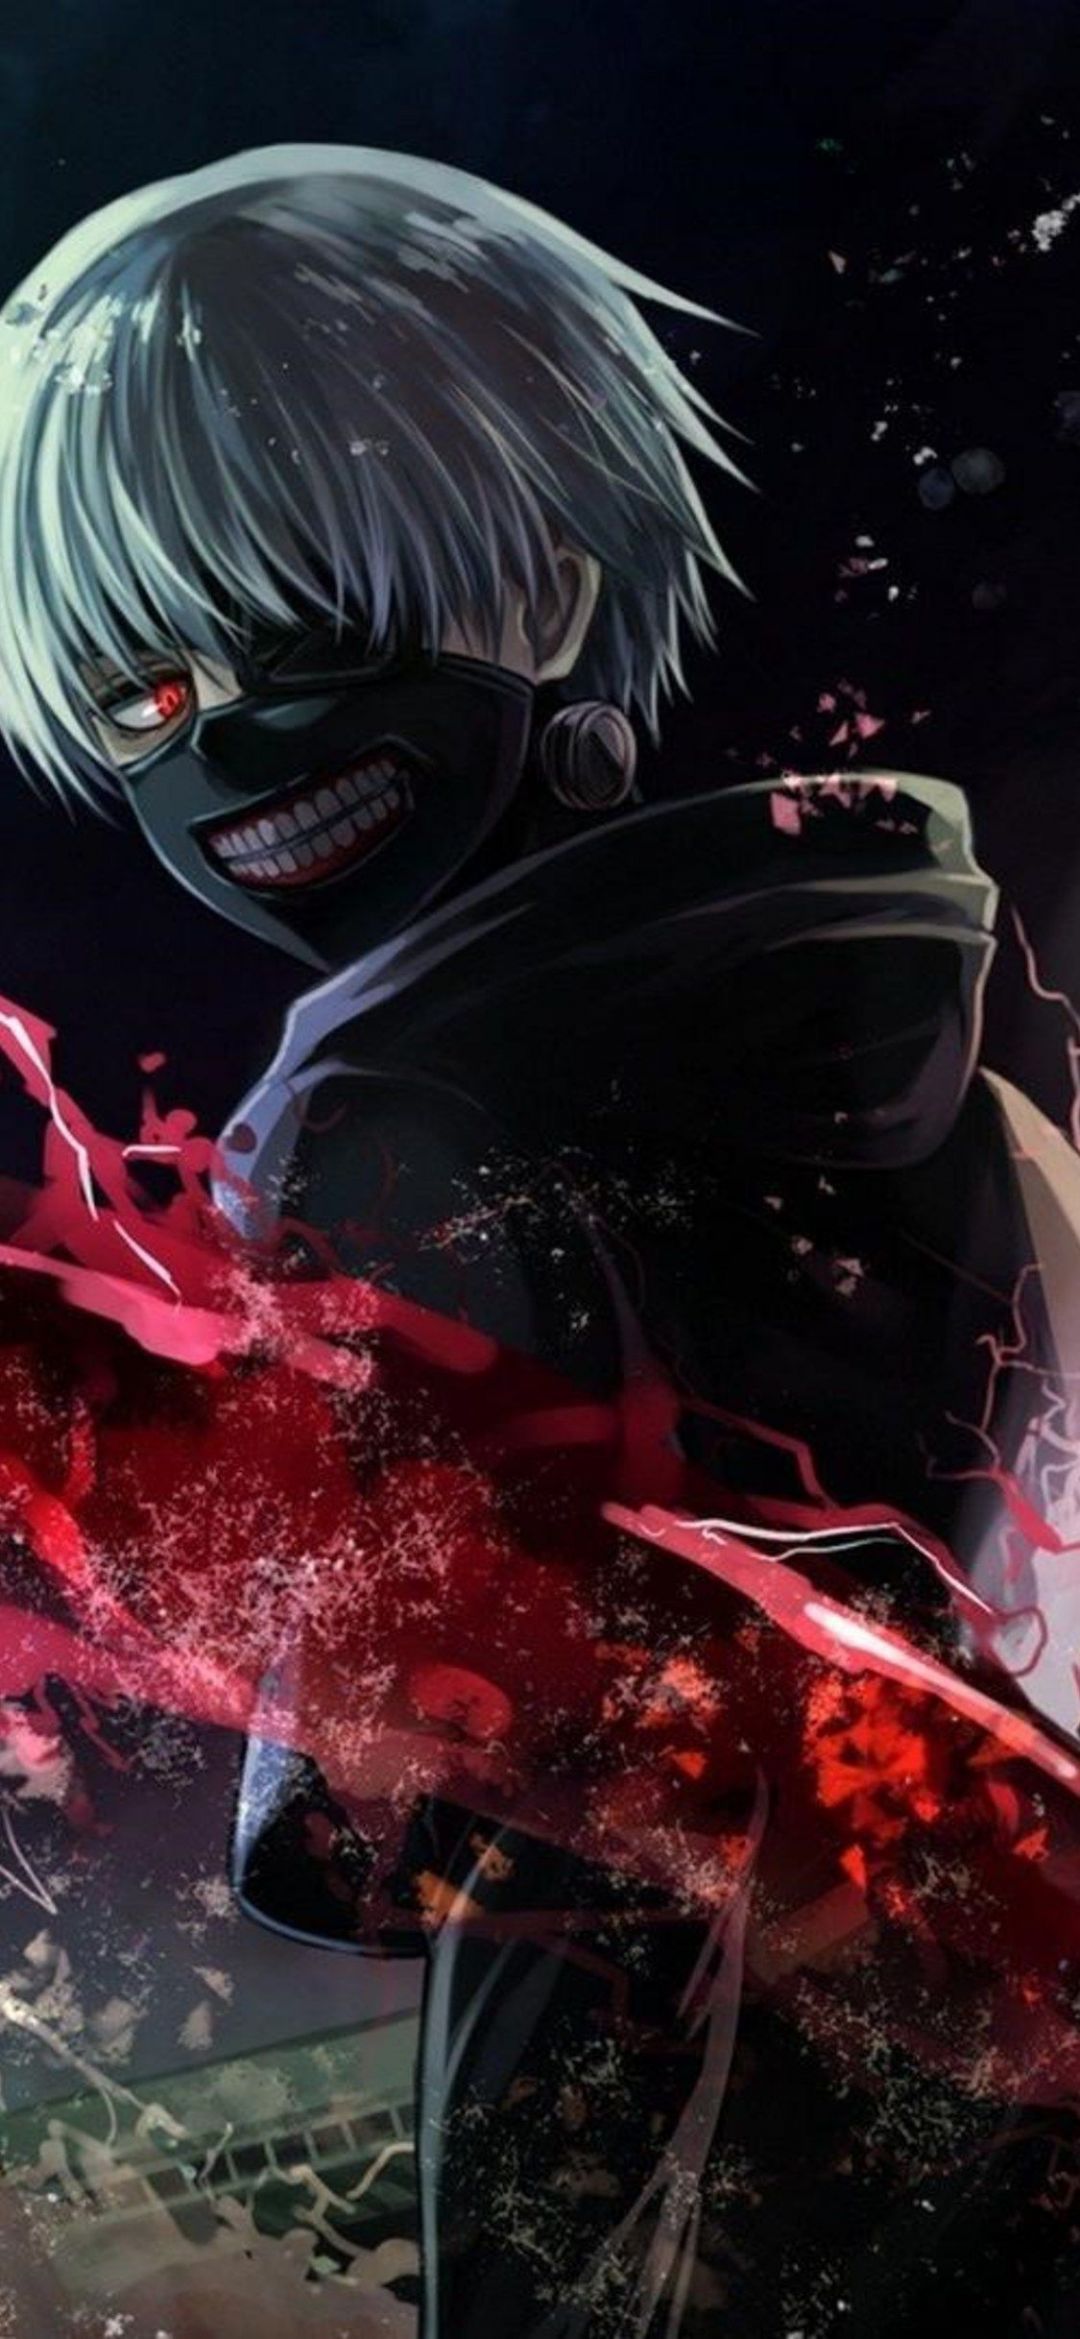 tokyo ghoul wallpaper,cg artwork,anime,fictional character,demon,games